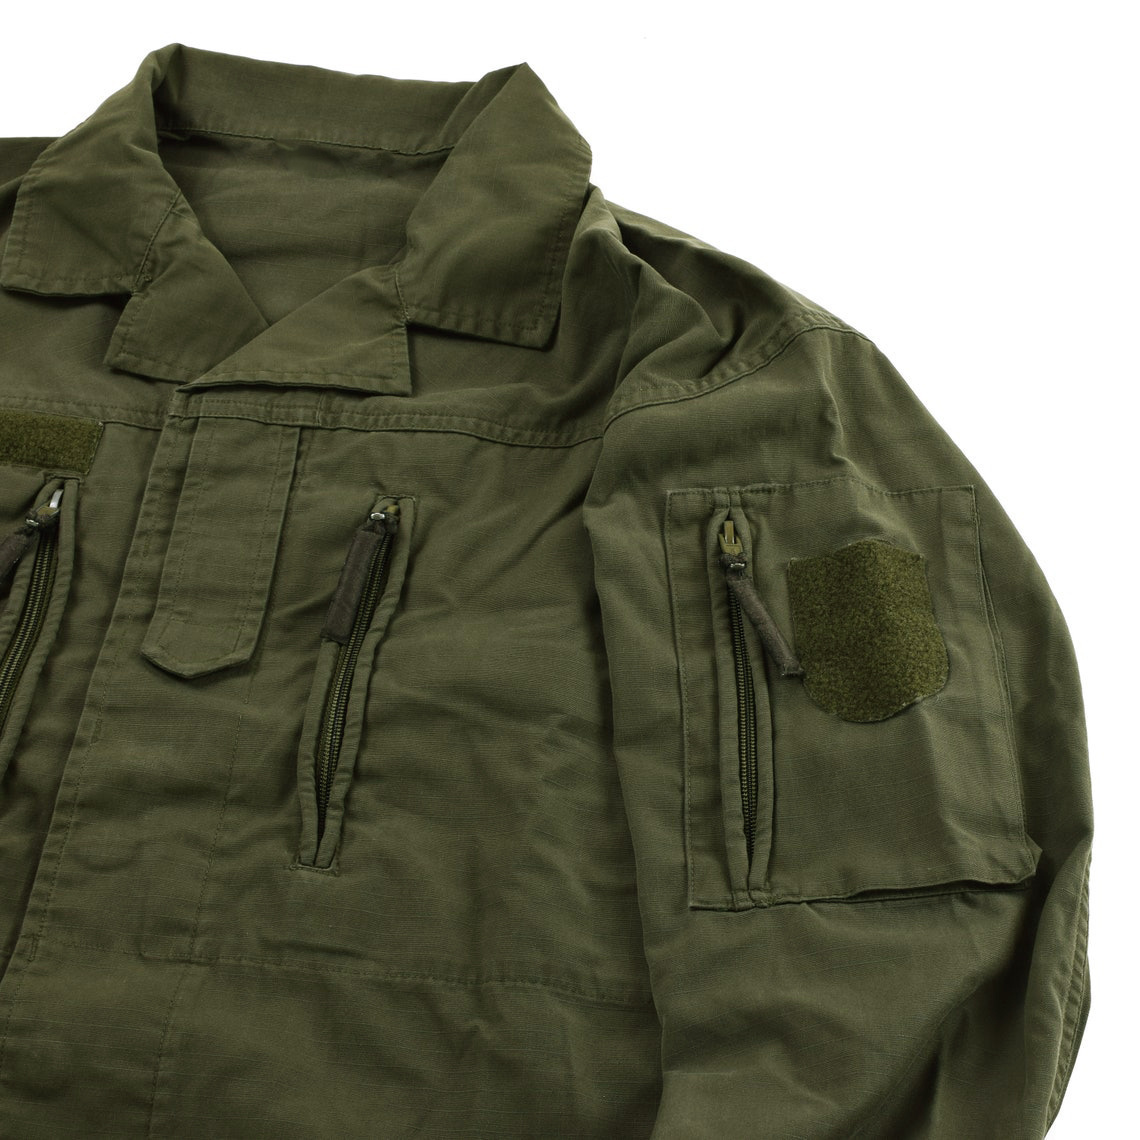 Men's Outdoor Zipper Multi-pocket Military Tactical Jacket